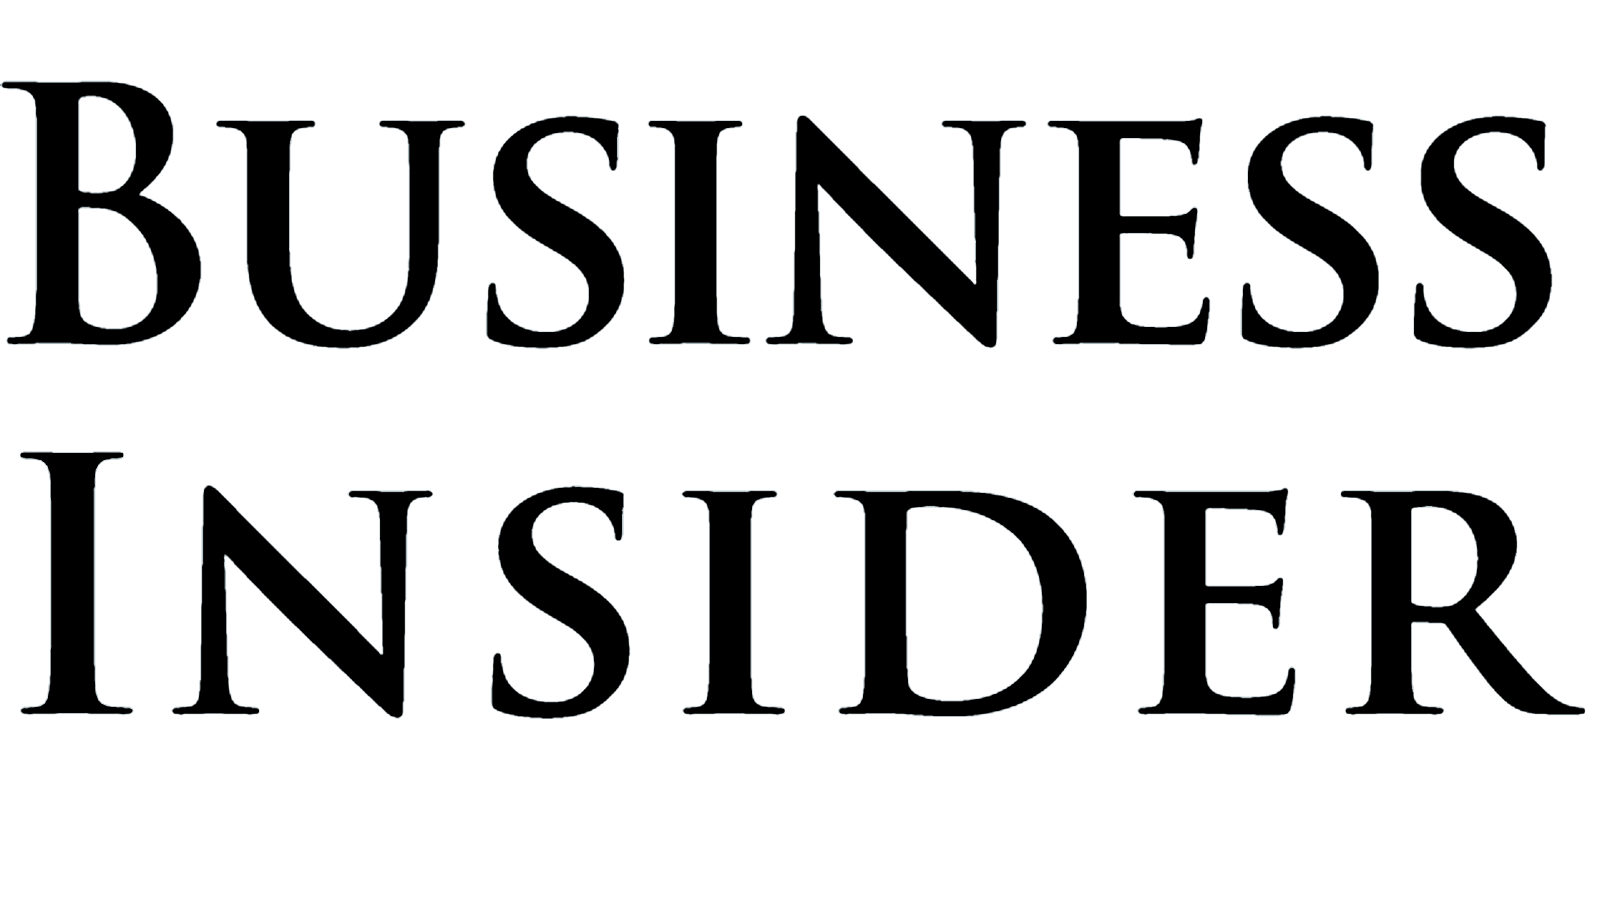 kisspng-business-insider-logo-news-entrepreneurship-sangeet-5b3731a31d7910.5818174115303438431207.png